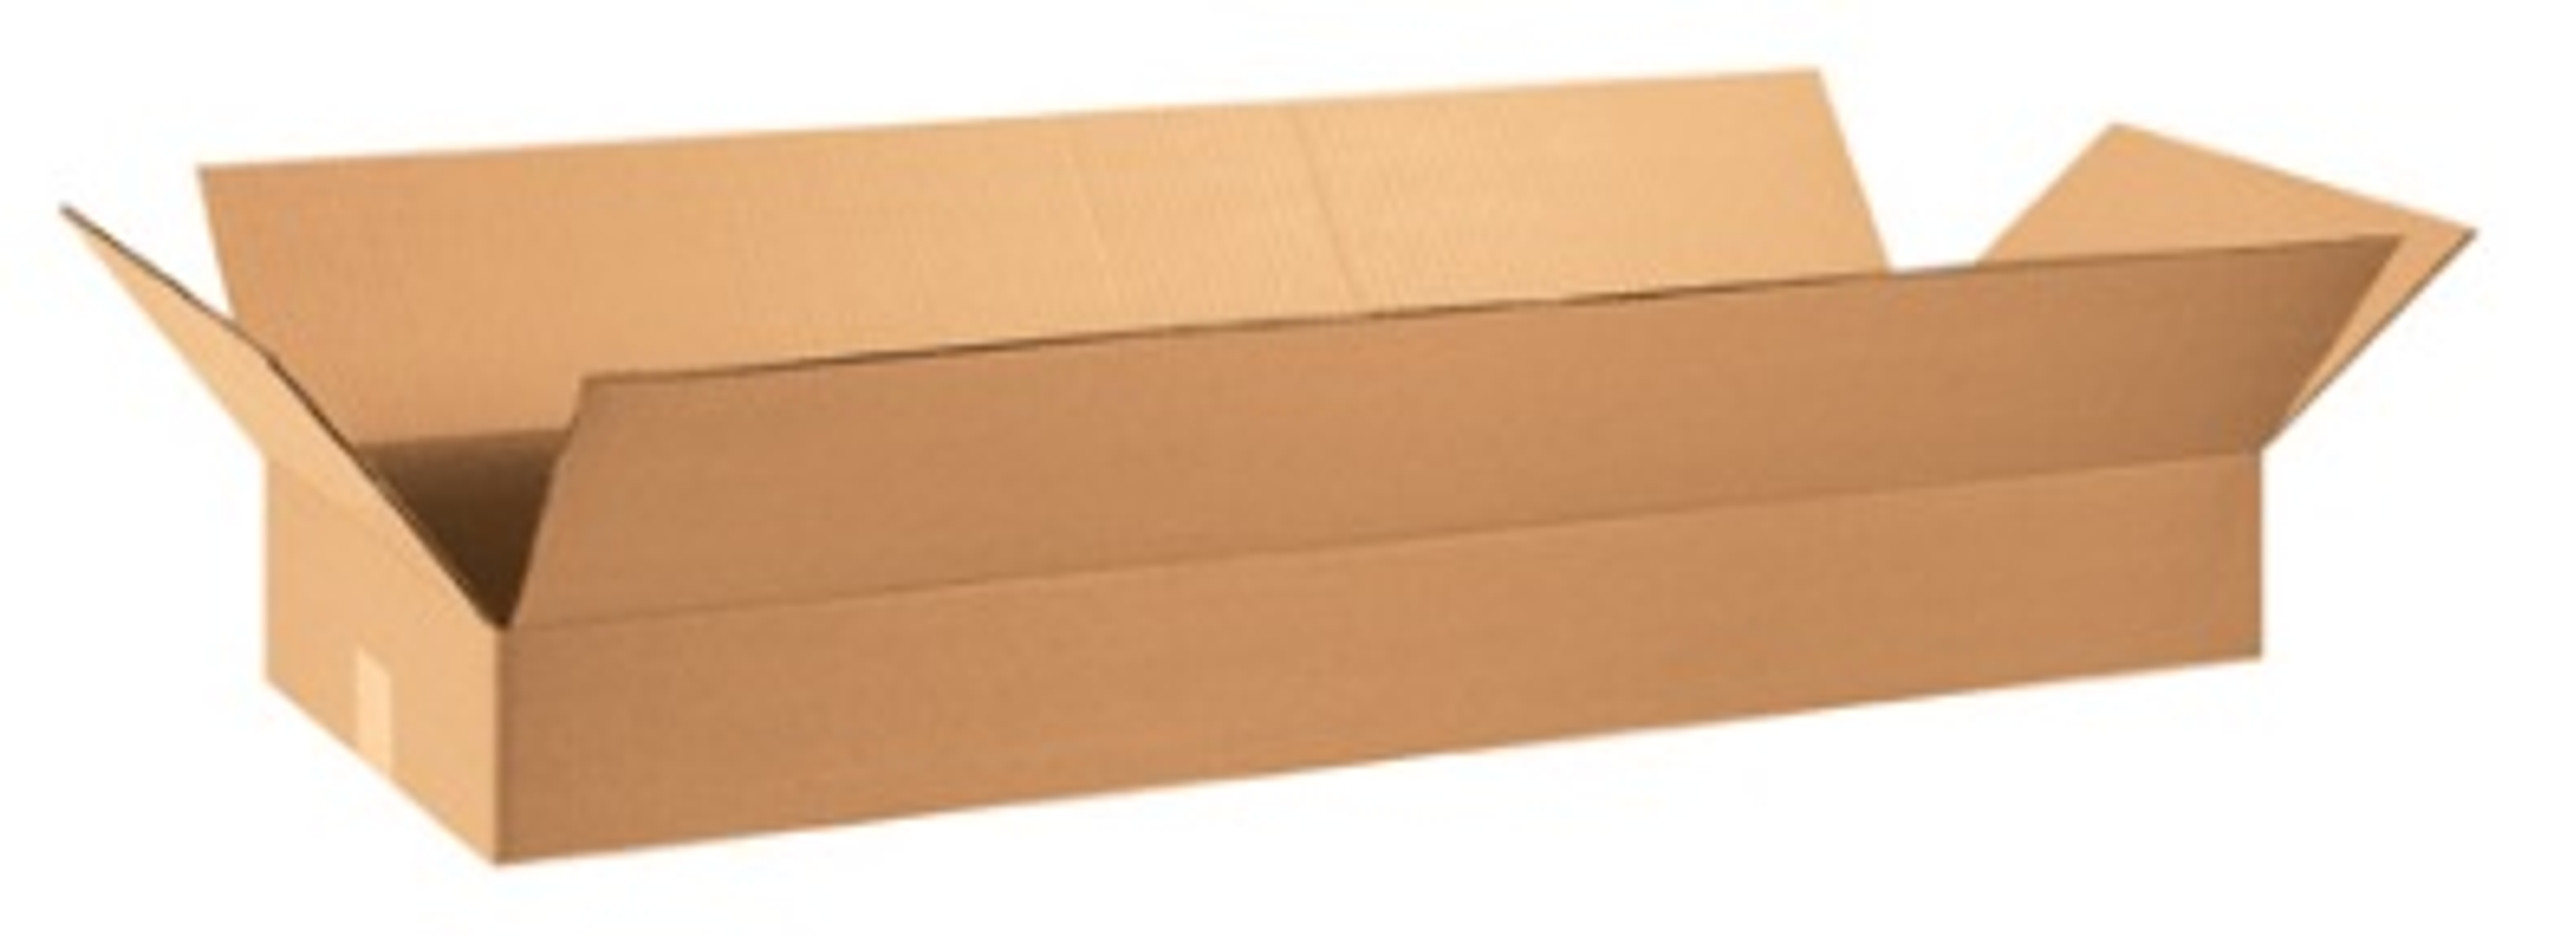 36 X 24 X 4 Flat Corrugated Cardboard Shipping Boxes 10bundle